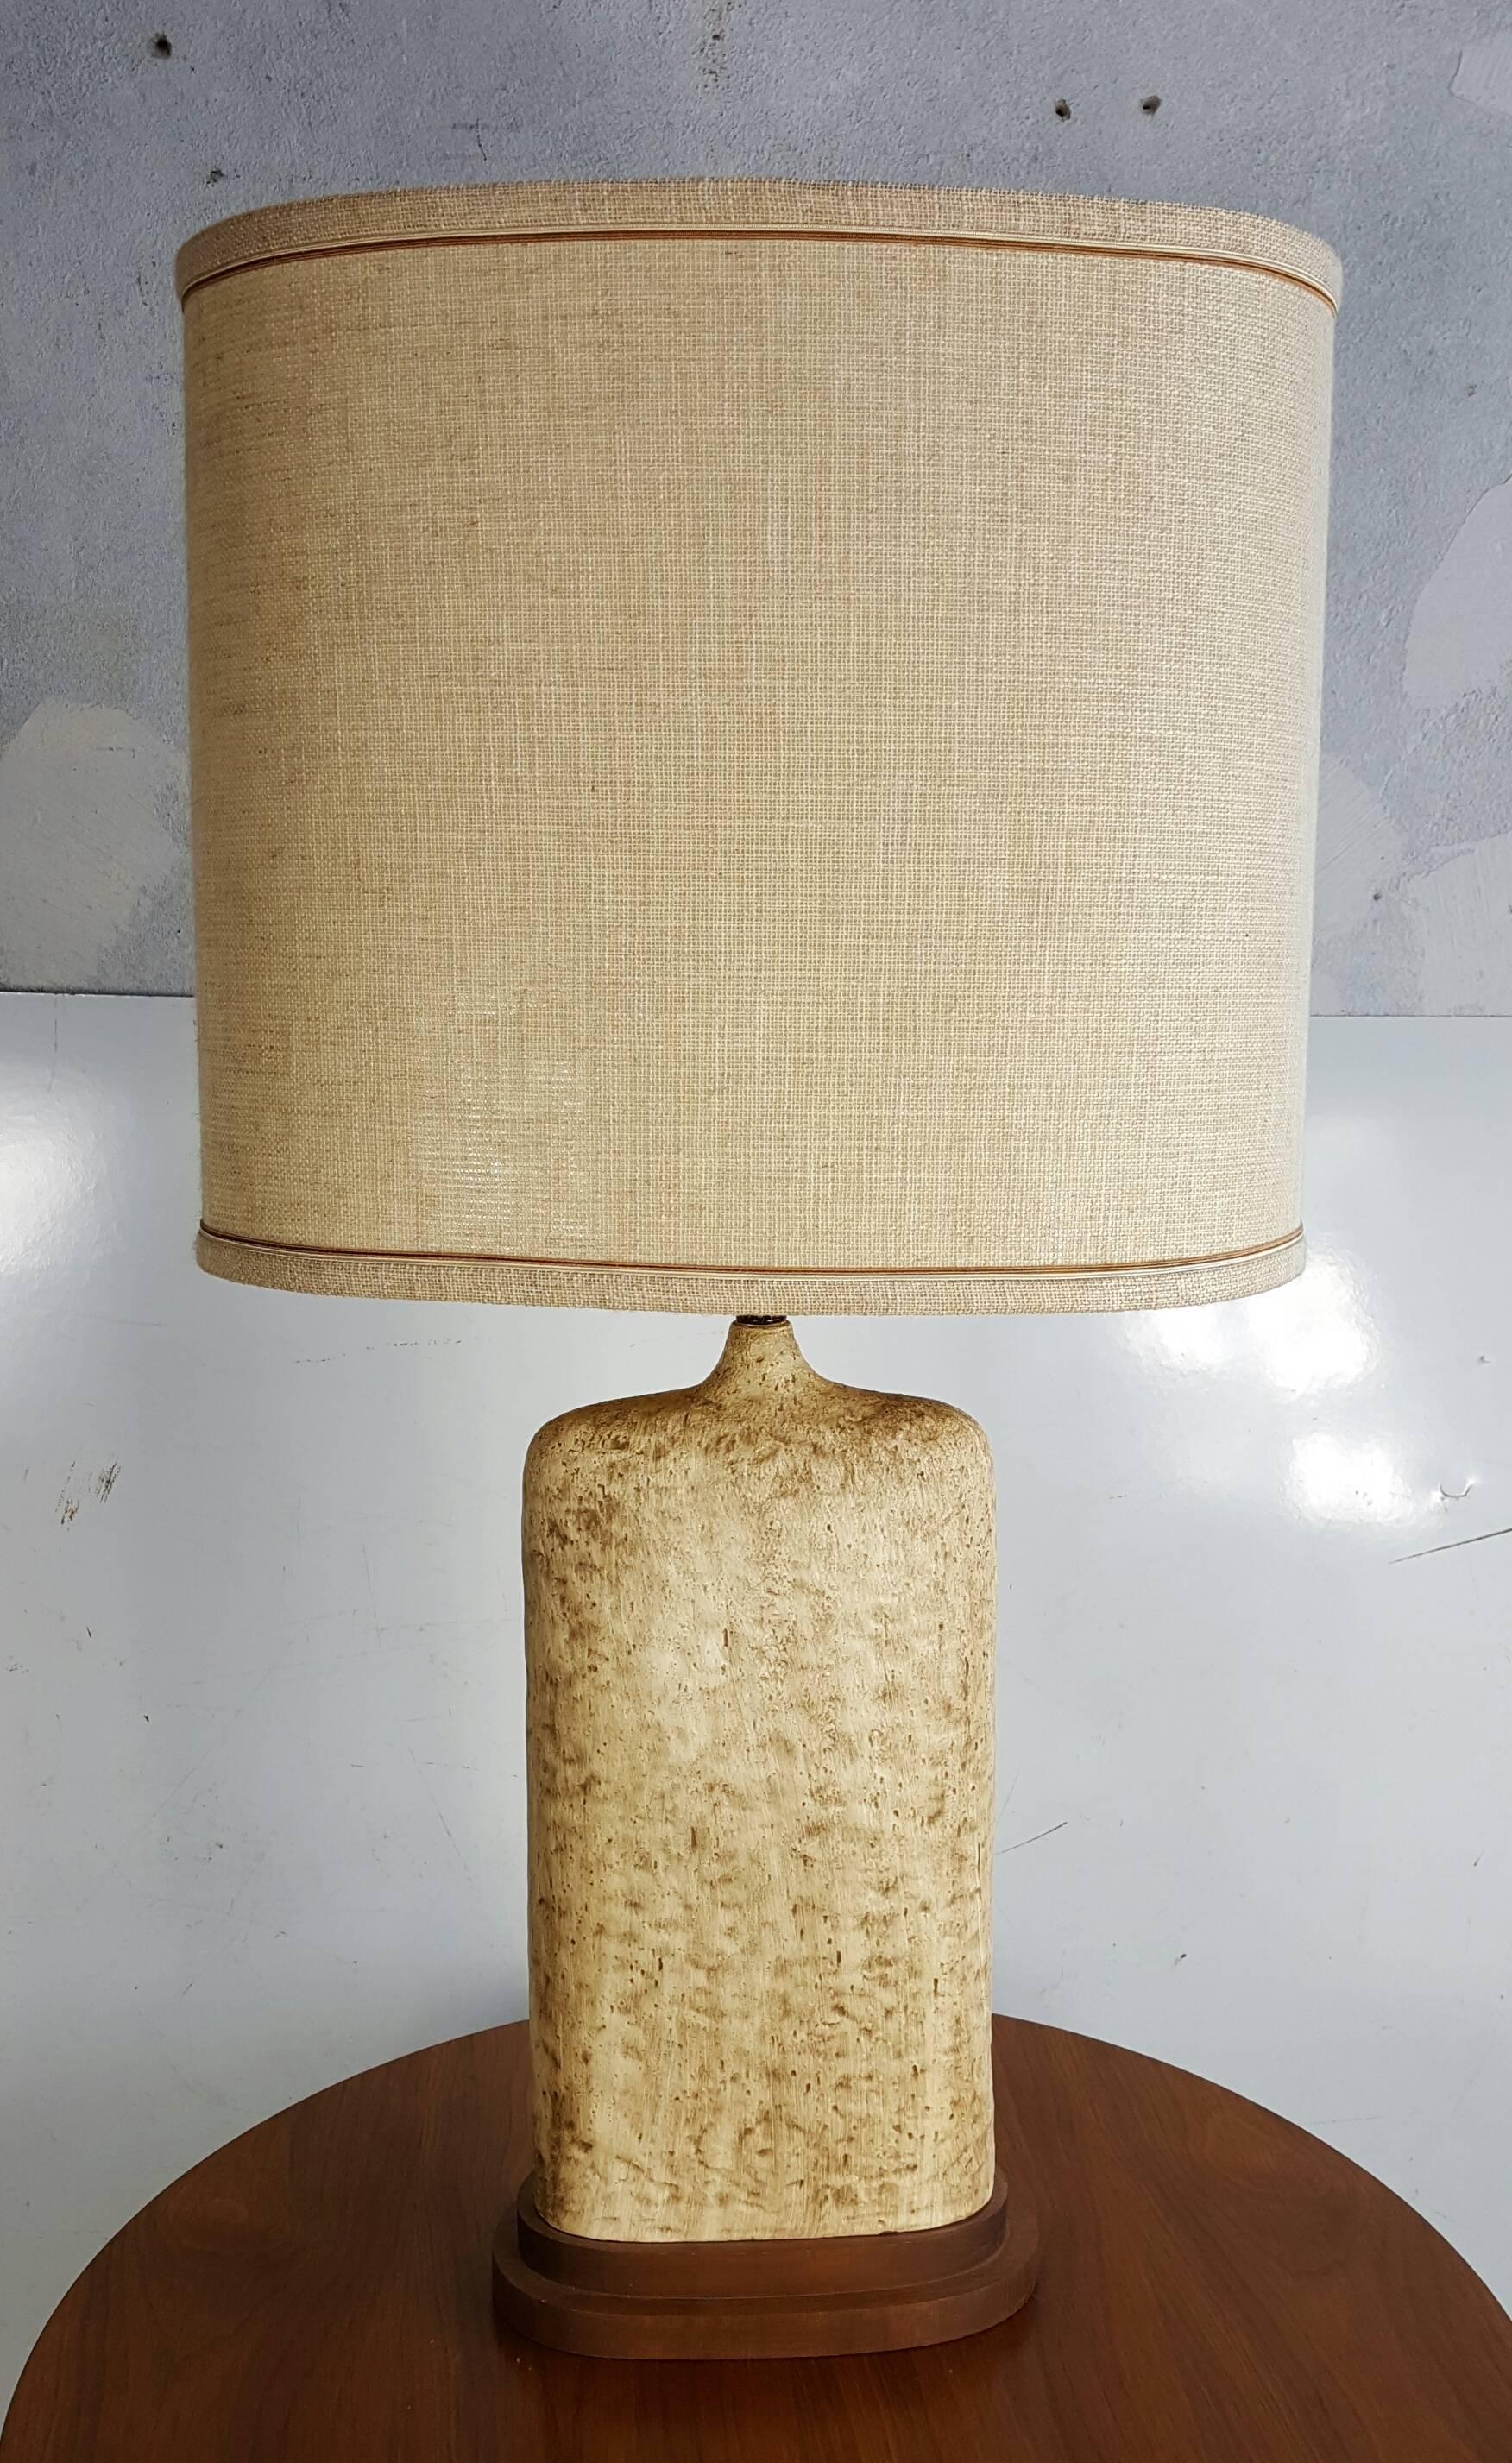 Wonderful mid century modern table lamp,,great form.drip glaze,,original wood plinth and shade,, manner of Fantoni